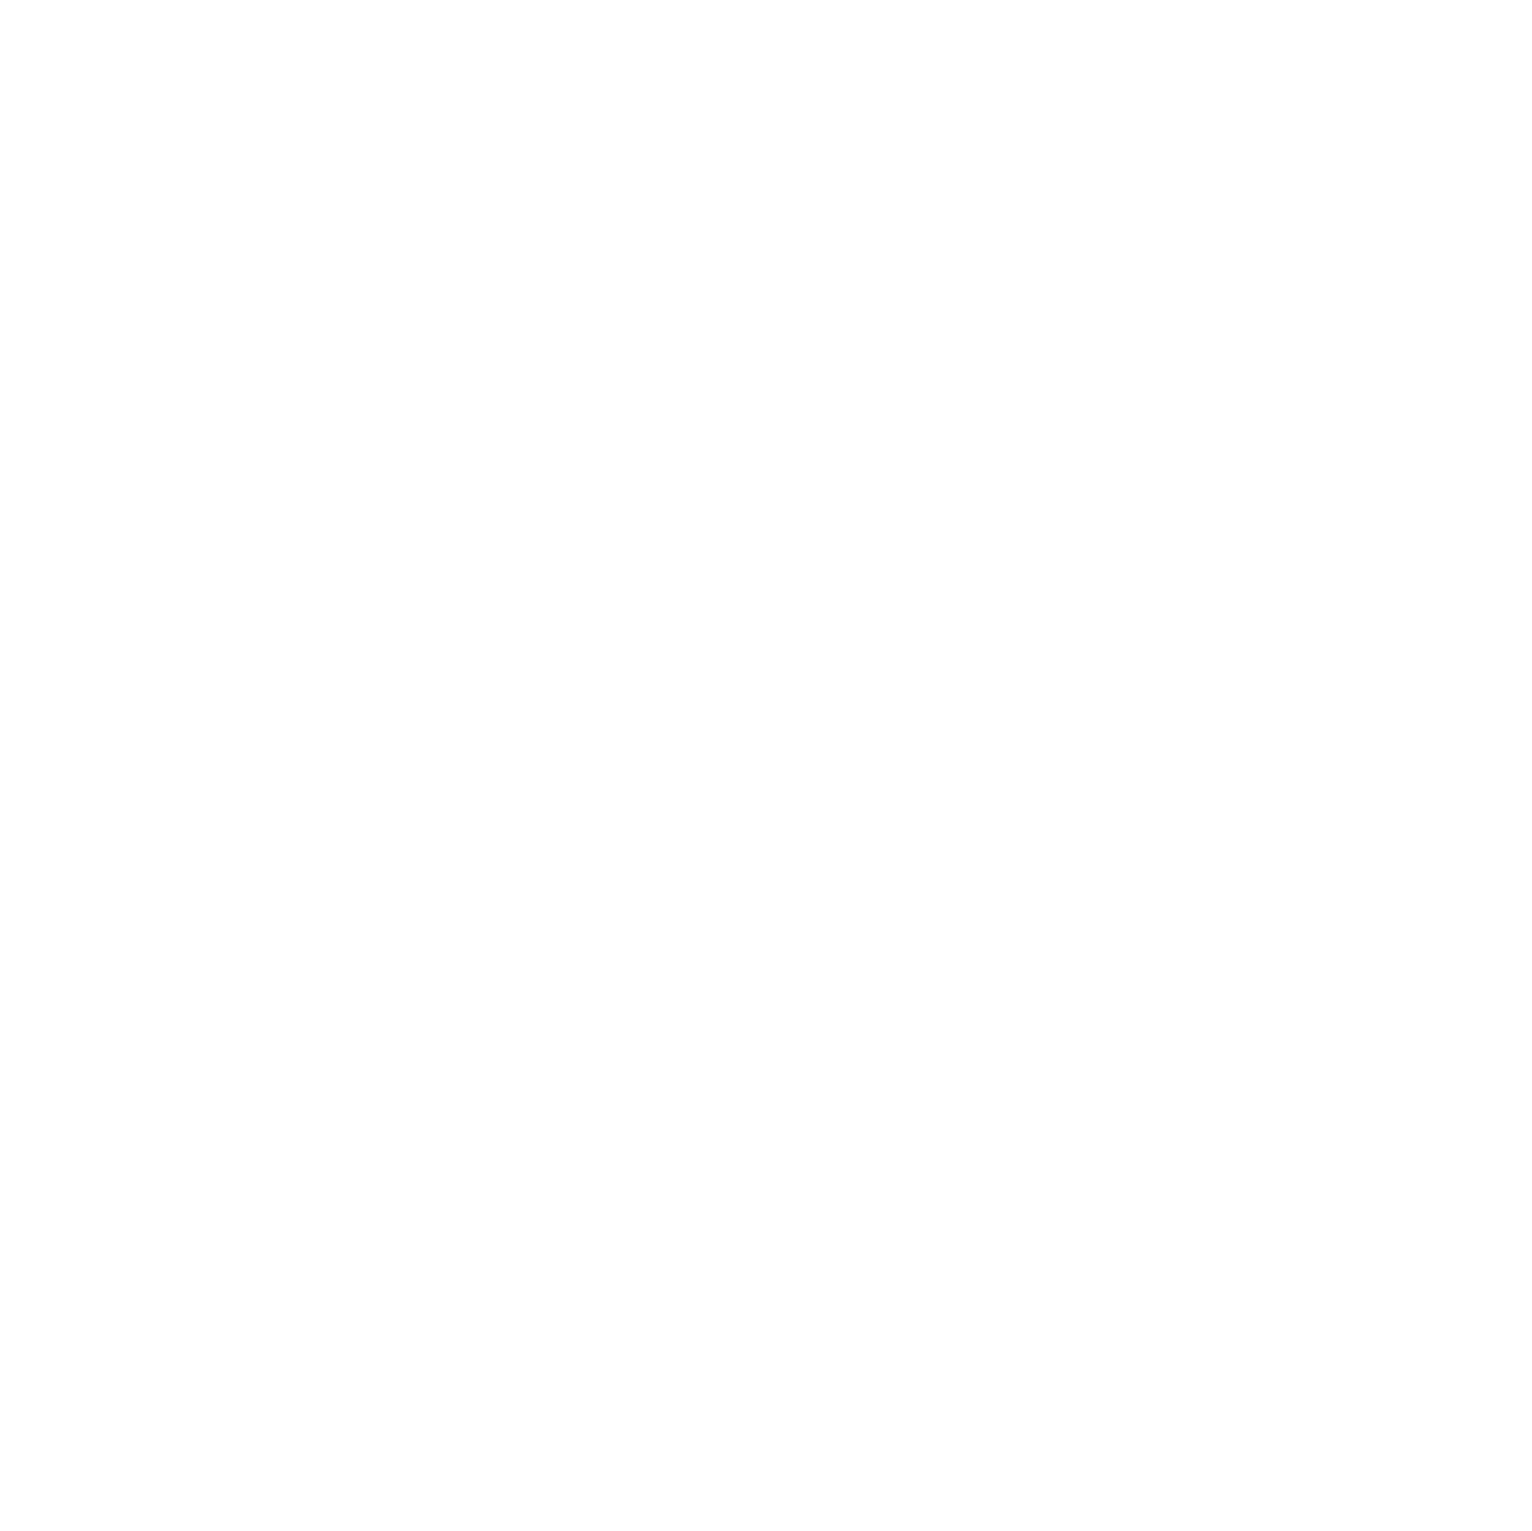 First Business Financial Services logo pour fonds sombres (PNG transparent)